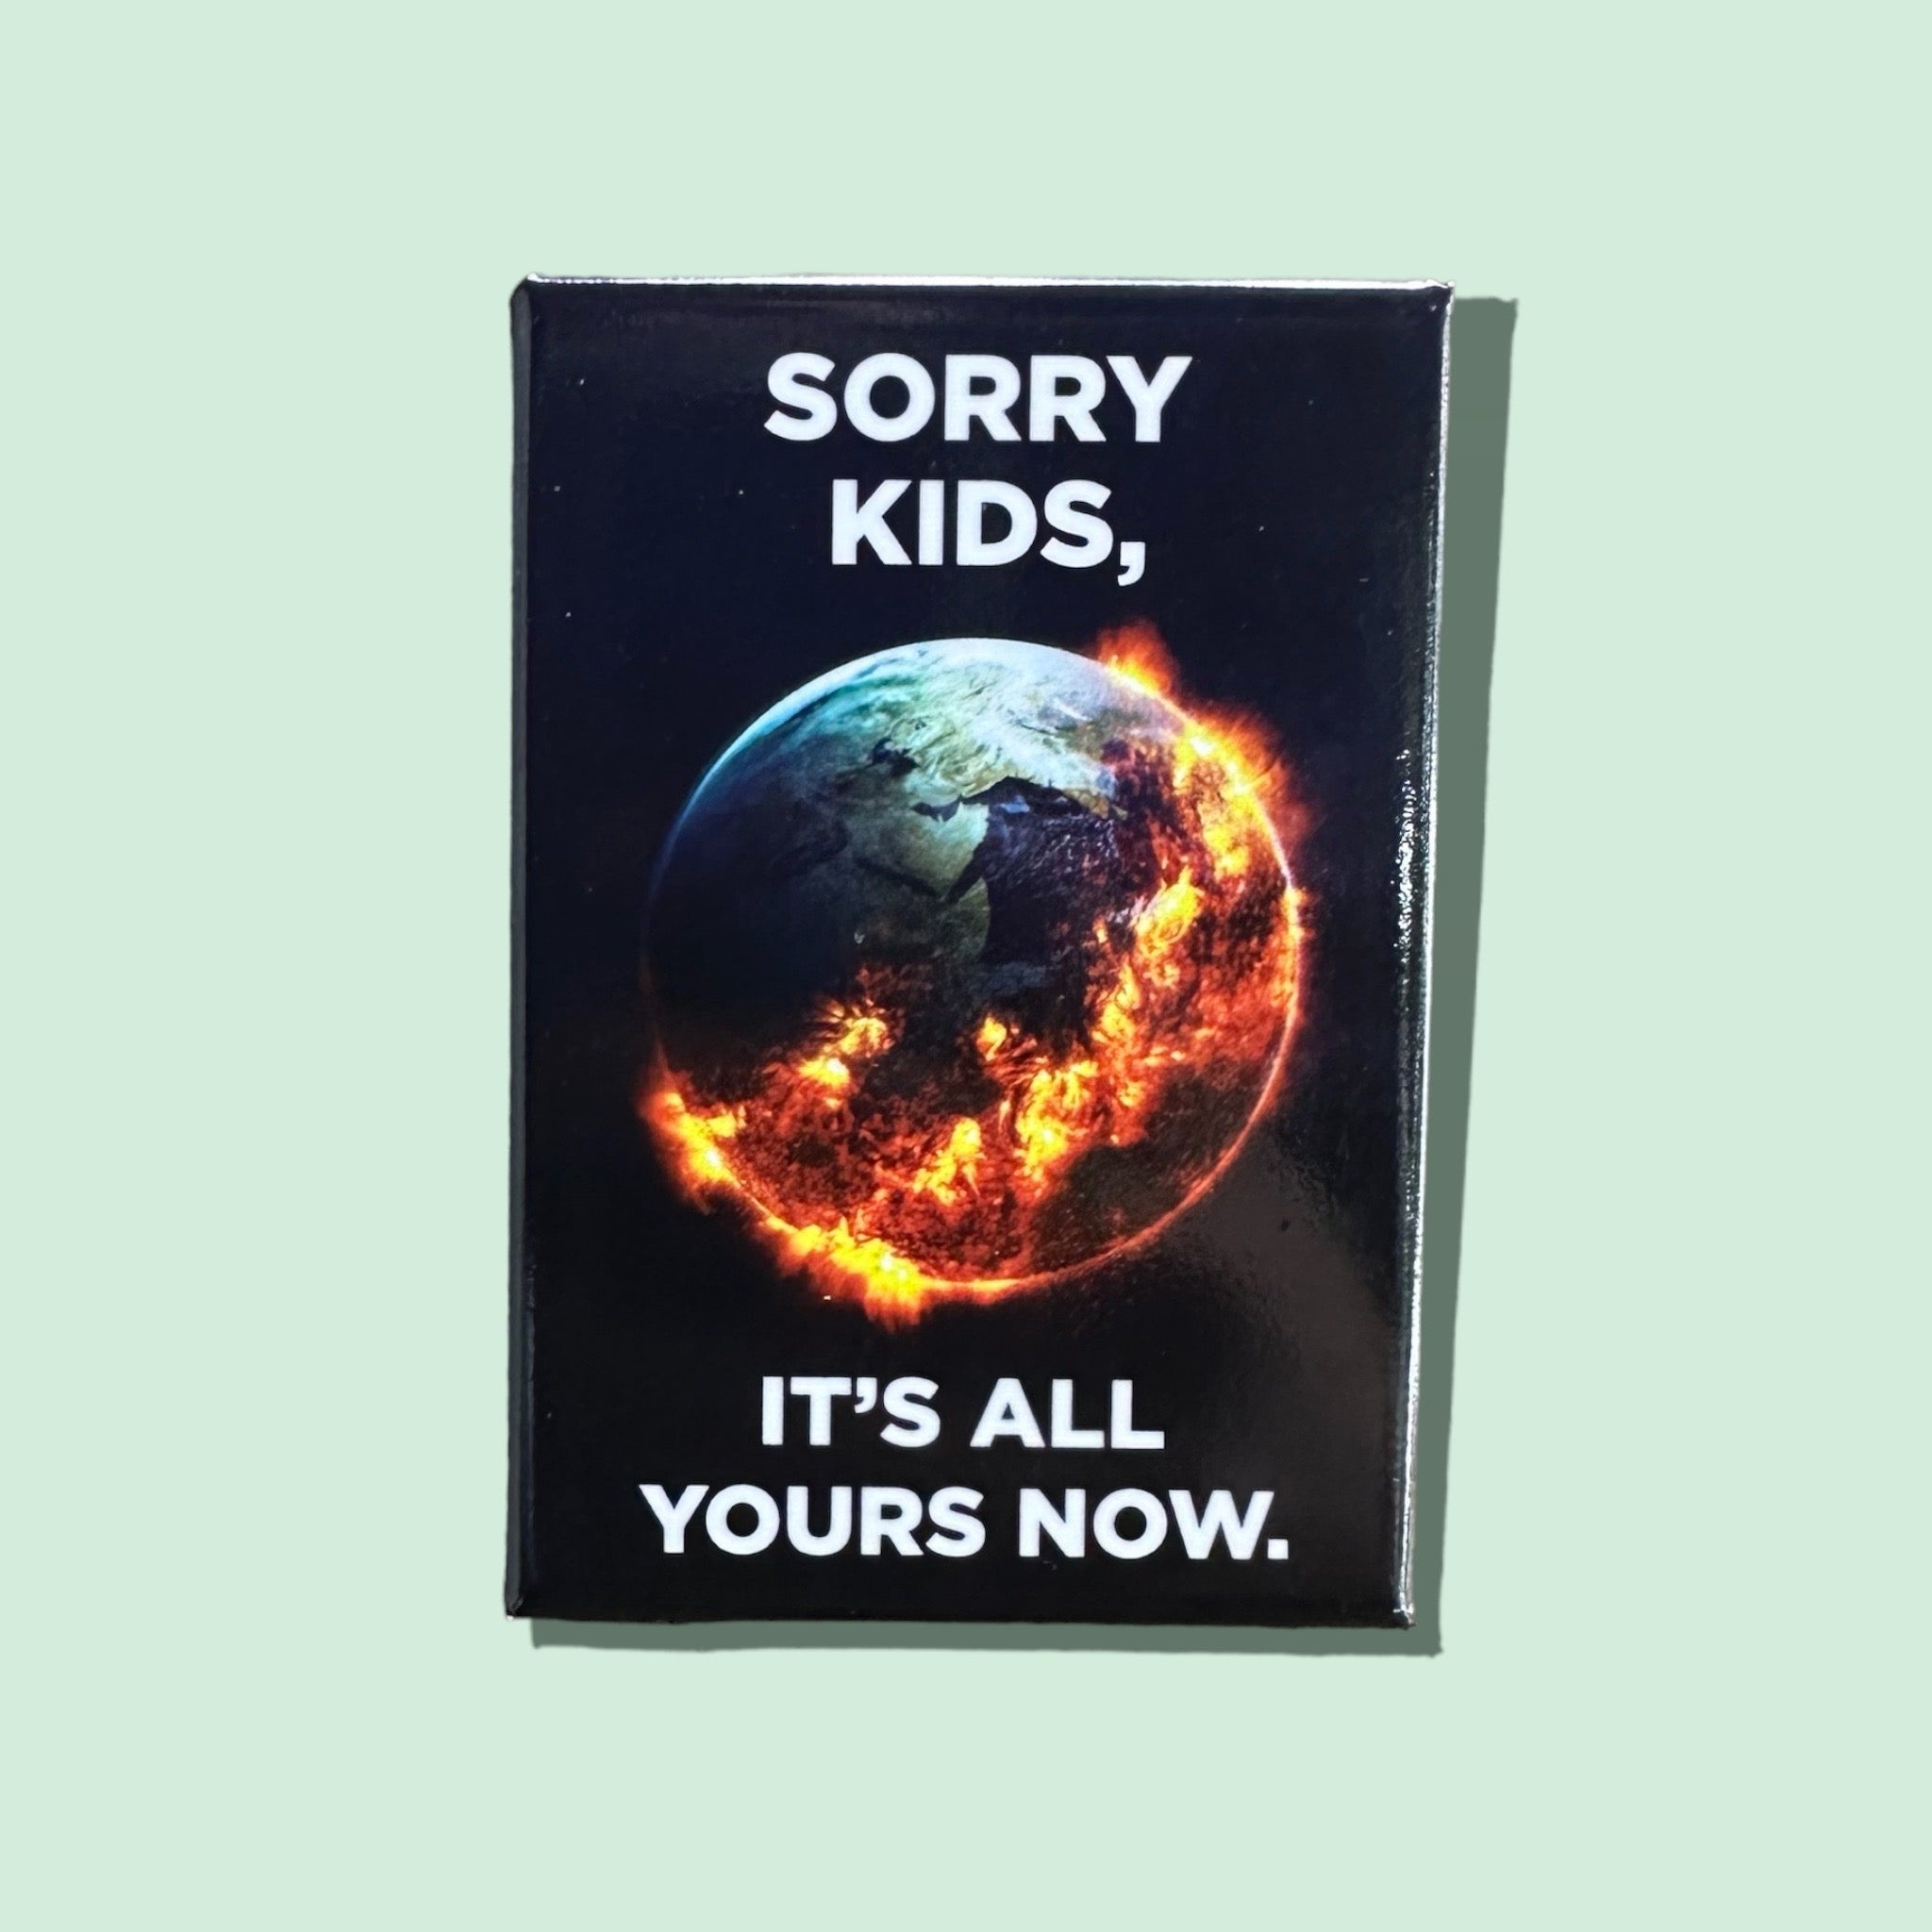 MAGNET "SORRY KIDS"